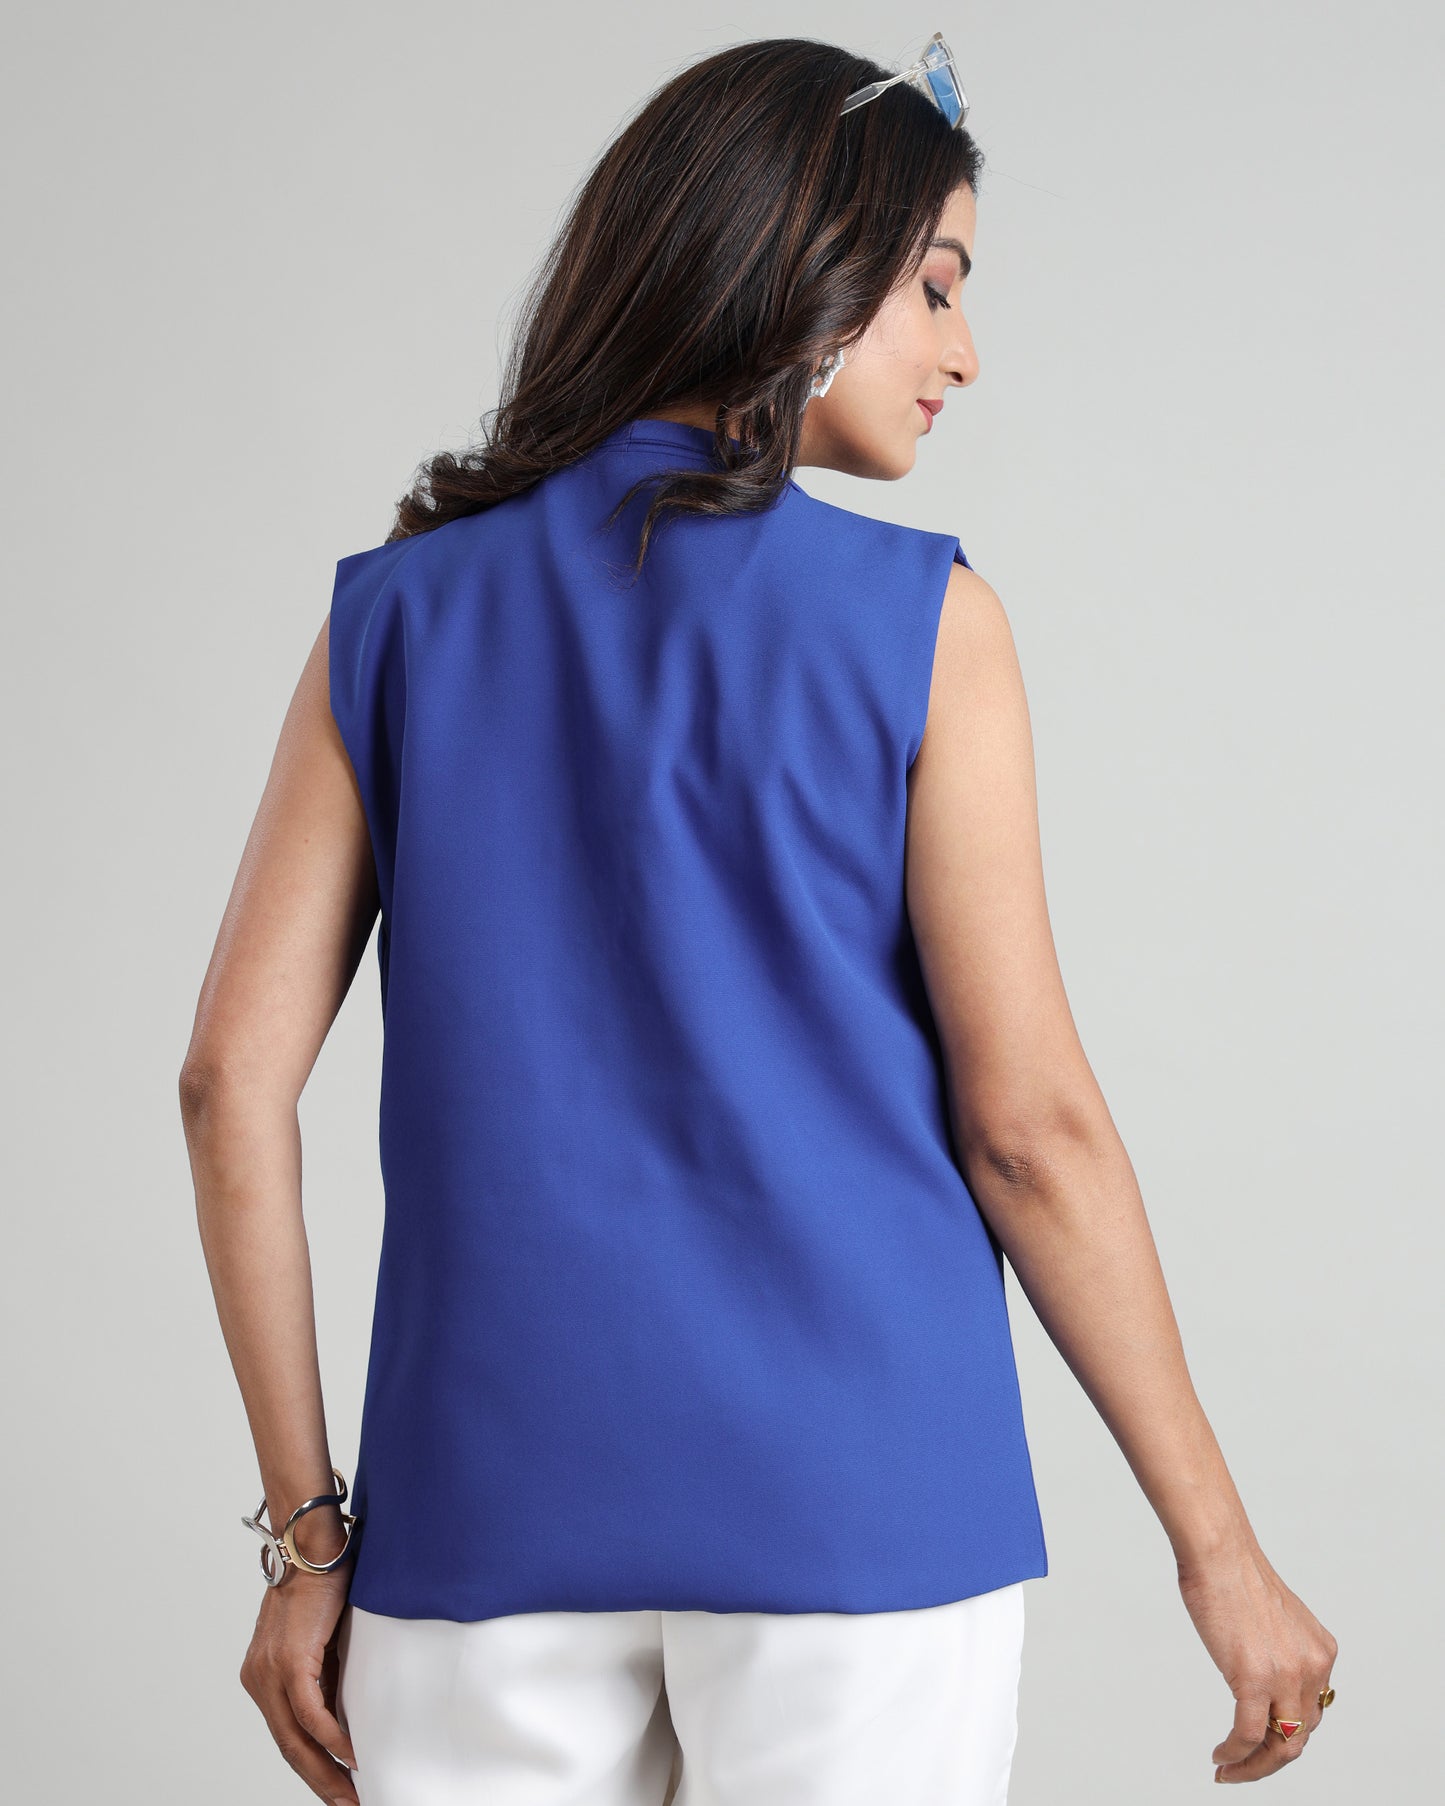 The Blue Crush: Women's Versatile Sleeveless Jacket